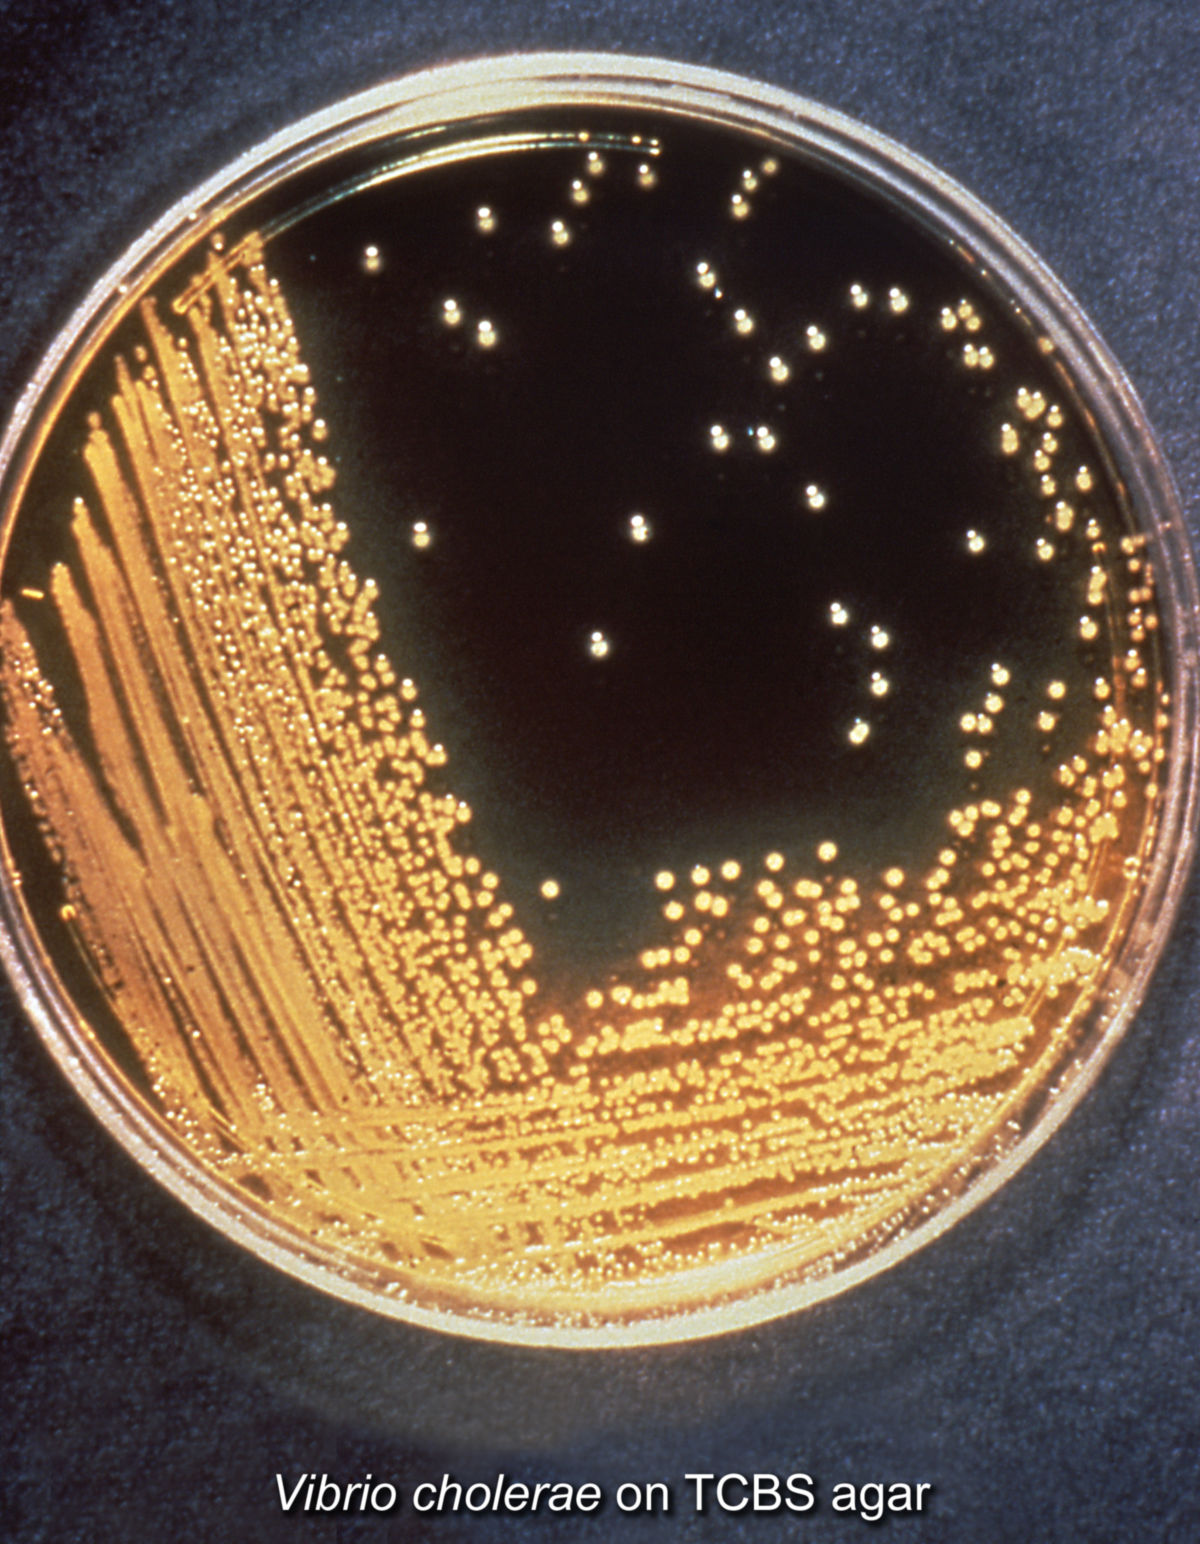 Cholera-Bakterien (Vibrio cholerae auf TCBS-Agar)